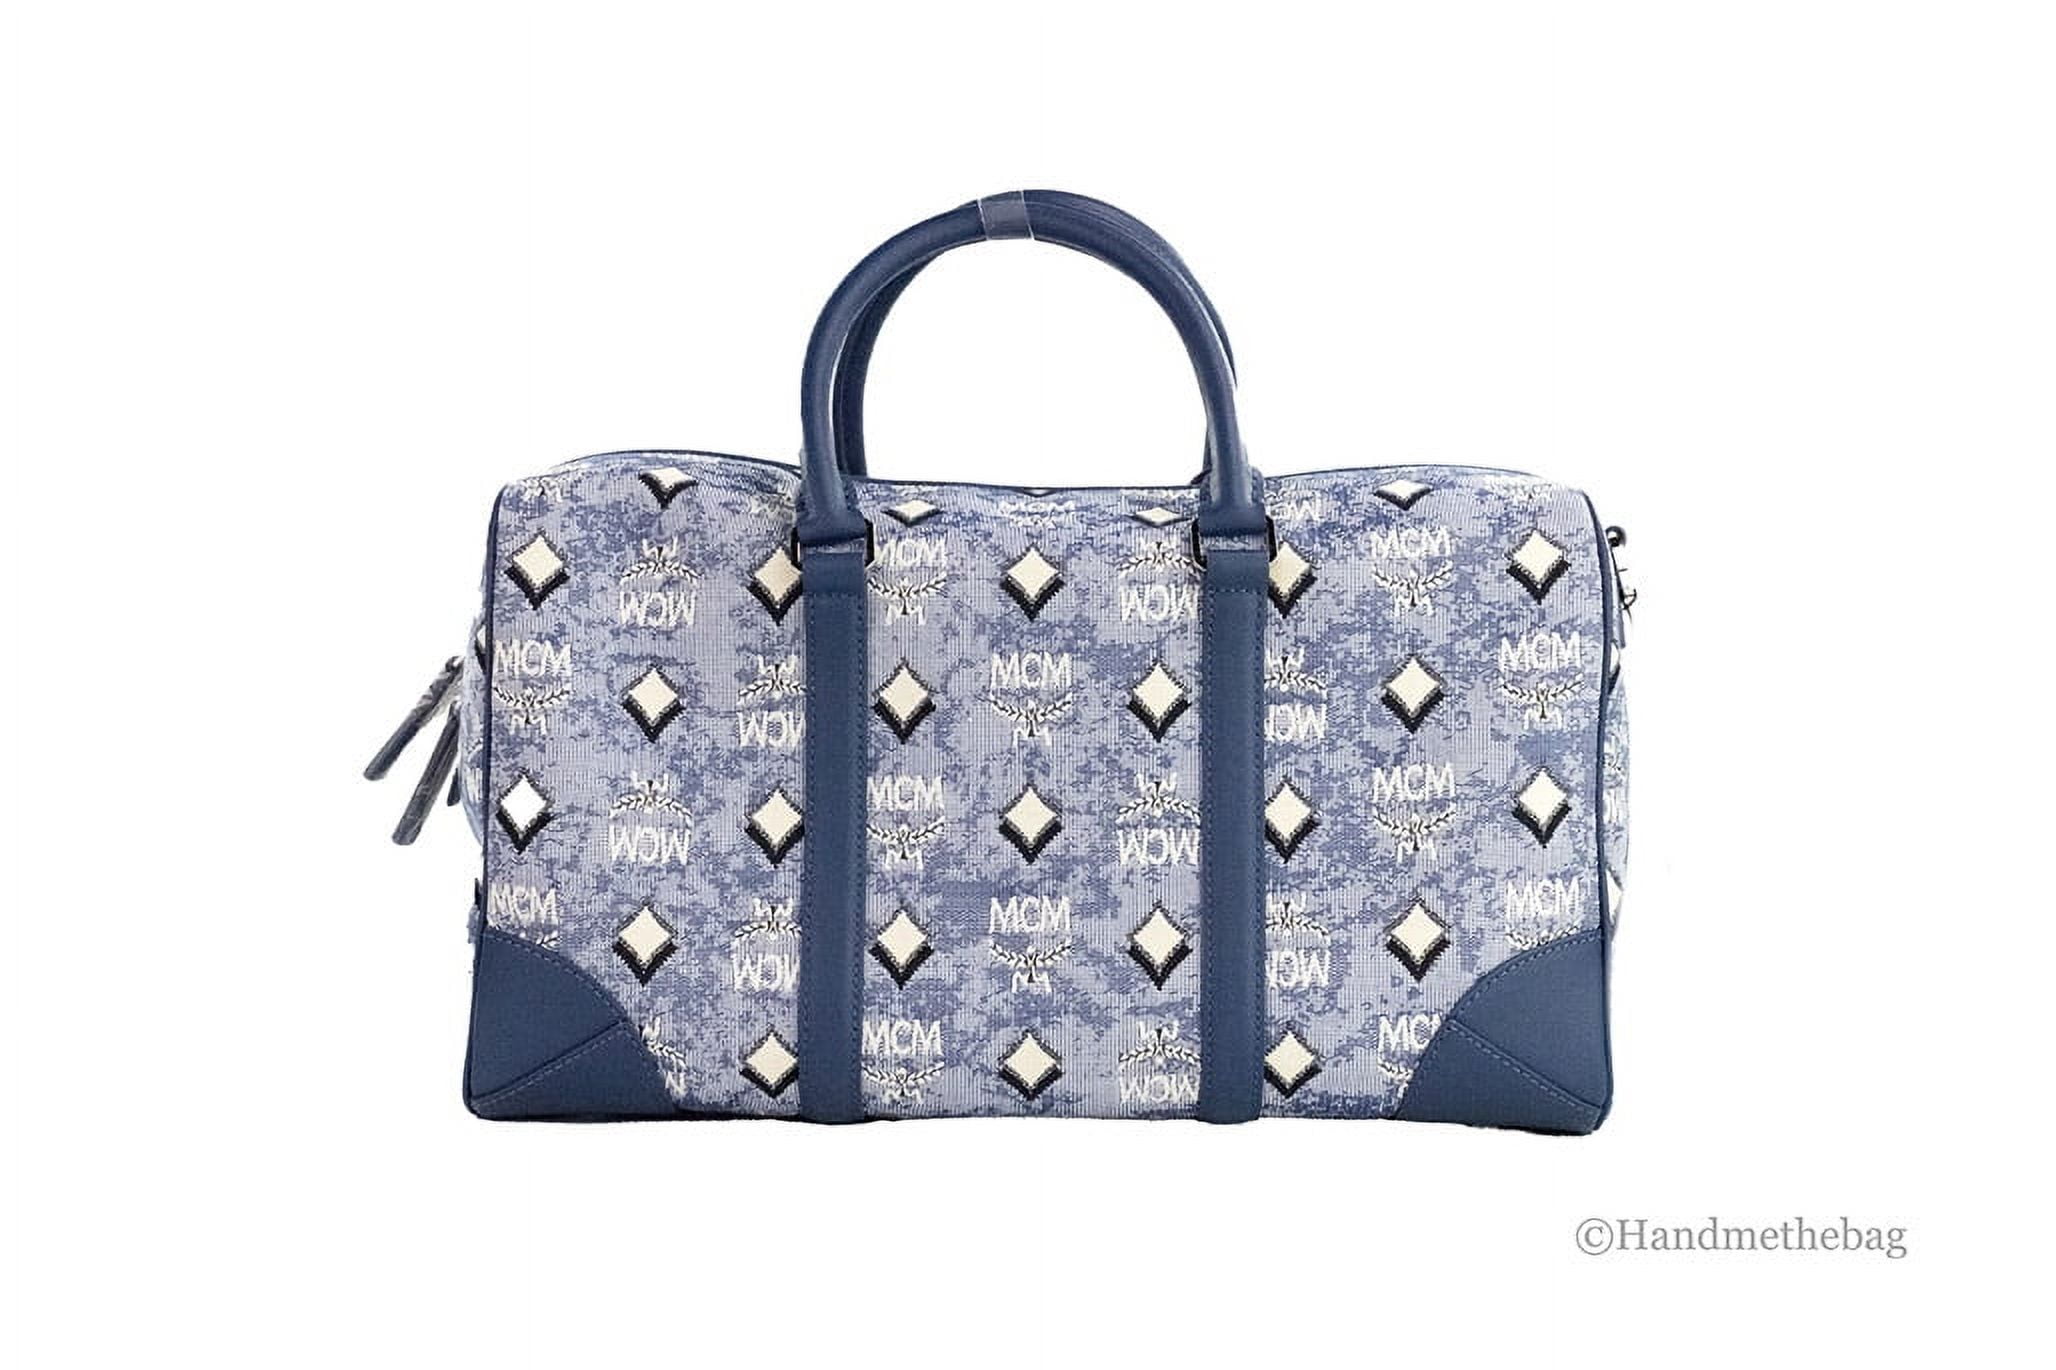 E Support Purse Straps Replacement Leather Handbags Shoulder Bag Wallet DIY 23.6